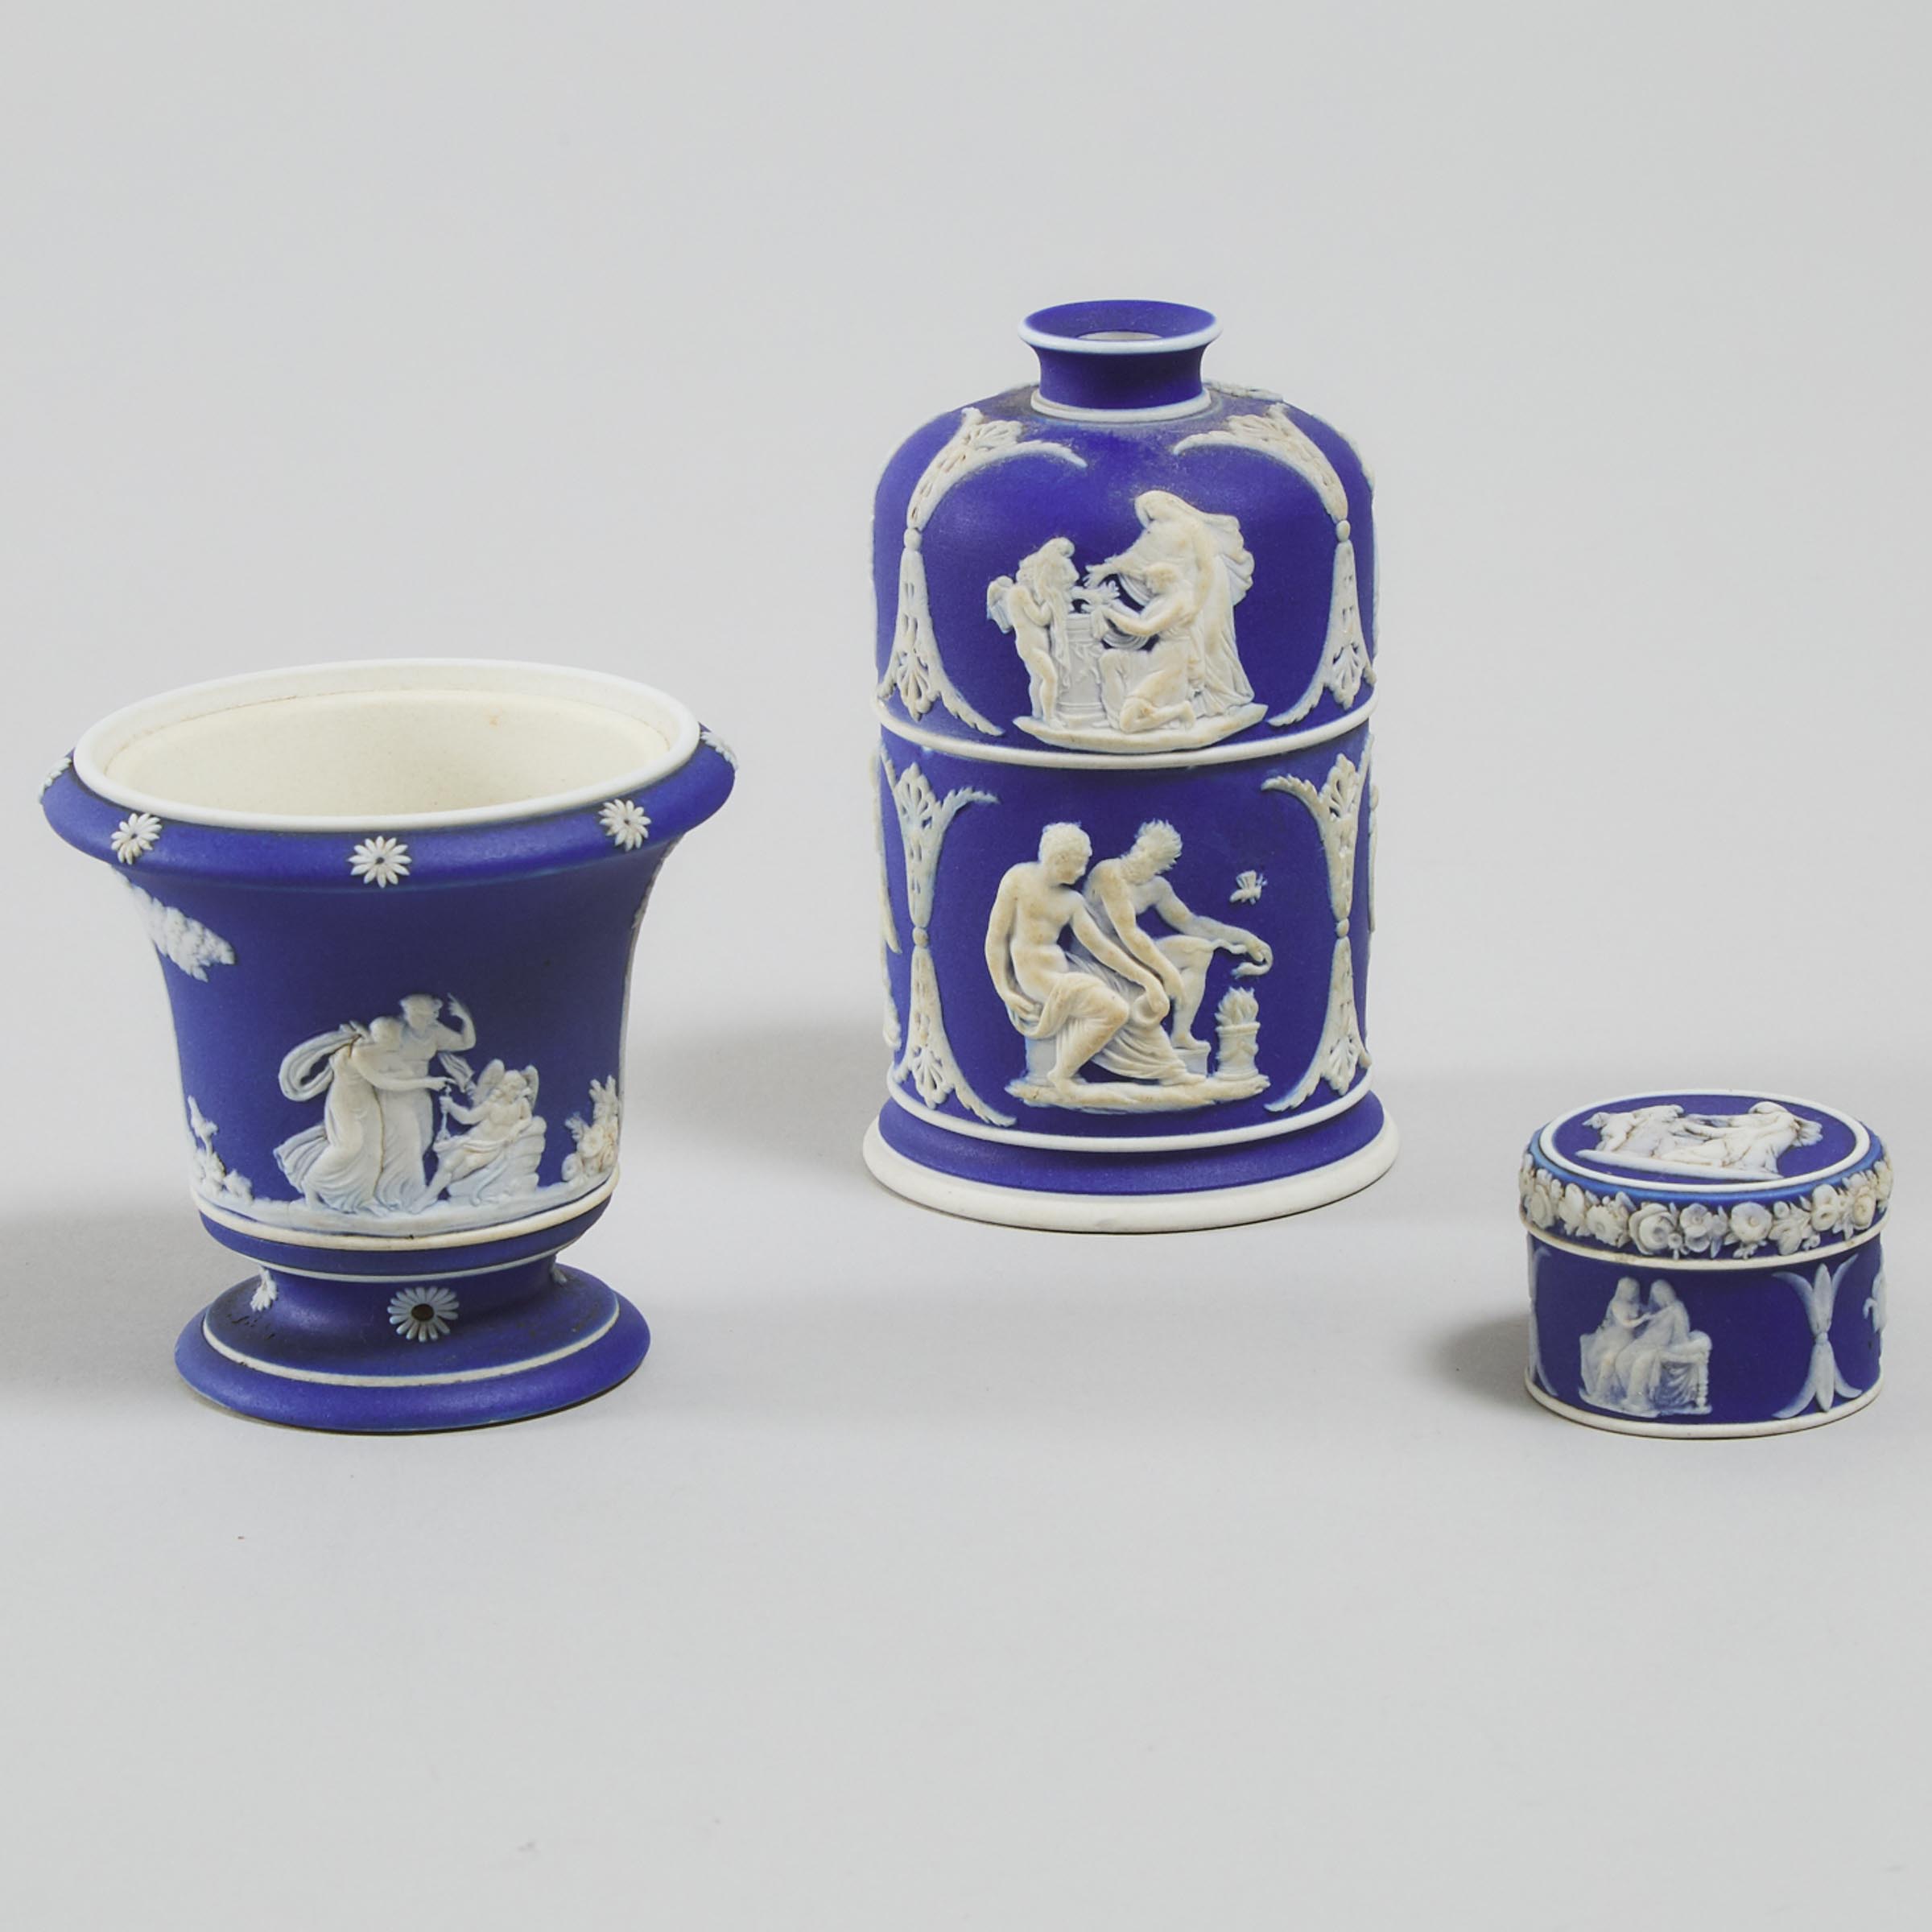 Wedgwood Blue Jasper-Dip Vesta Box with Taperstick Cover, Pomade Jar, and a Pastille Burner, 19th century